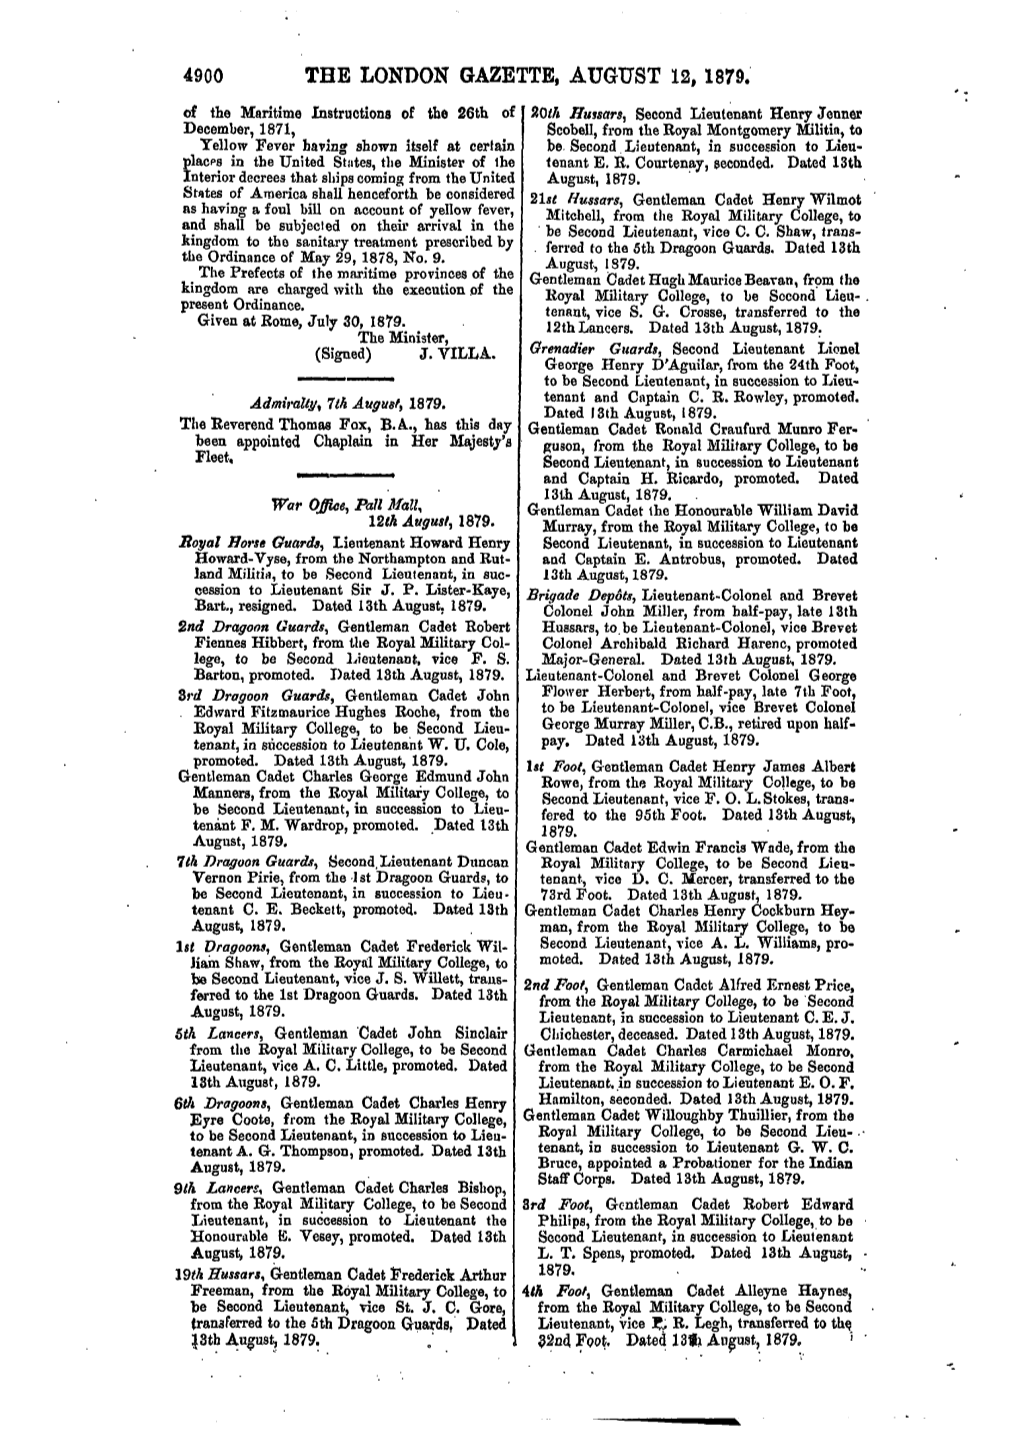 The London Gazette, August 12, 1879